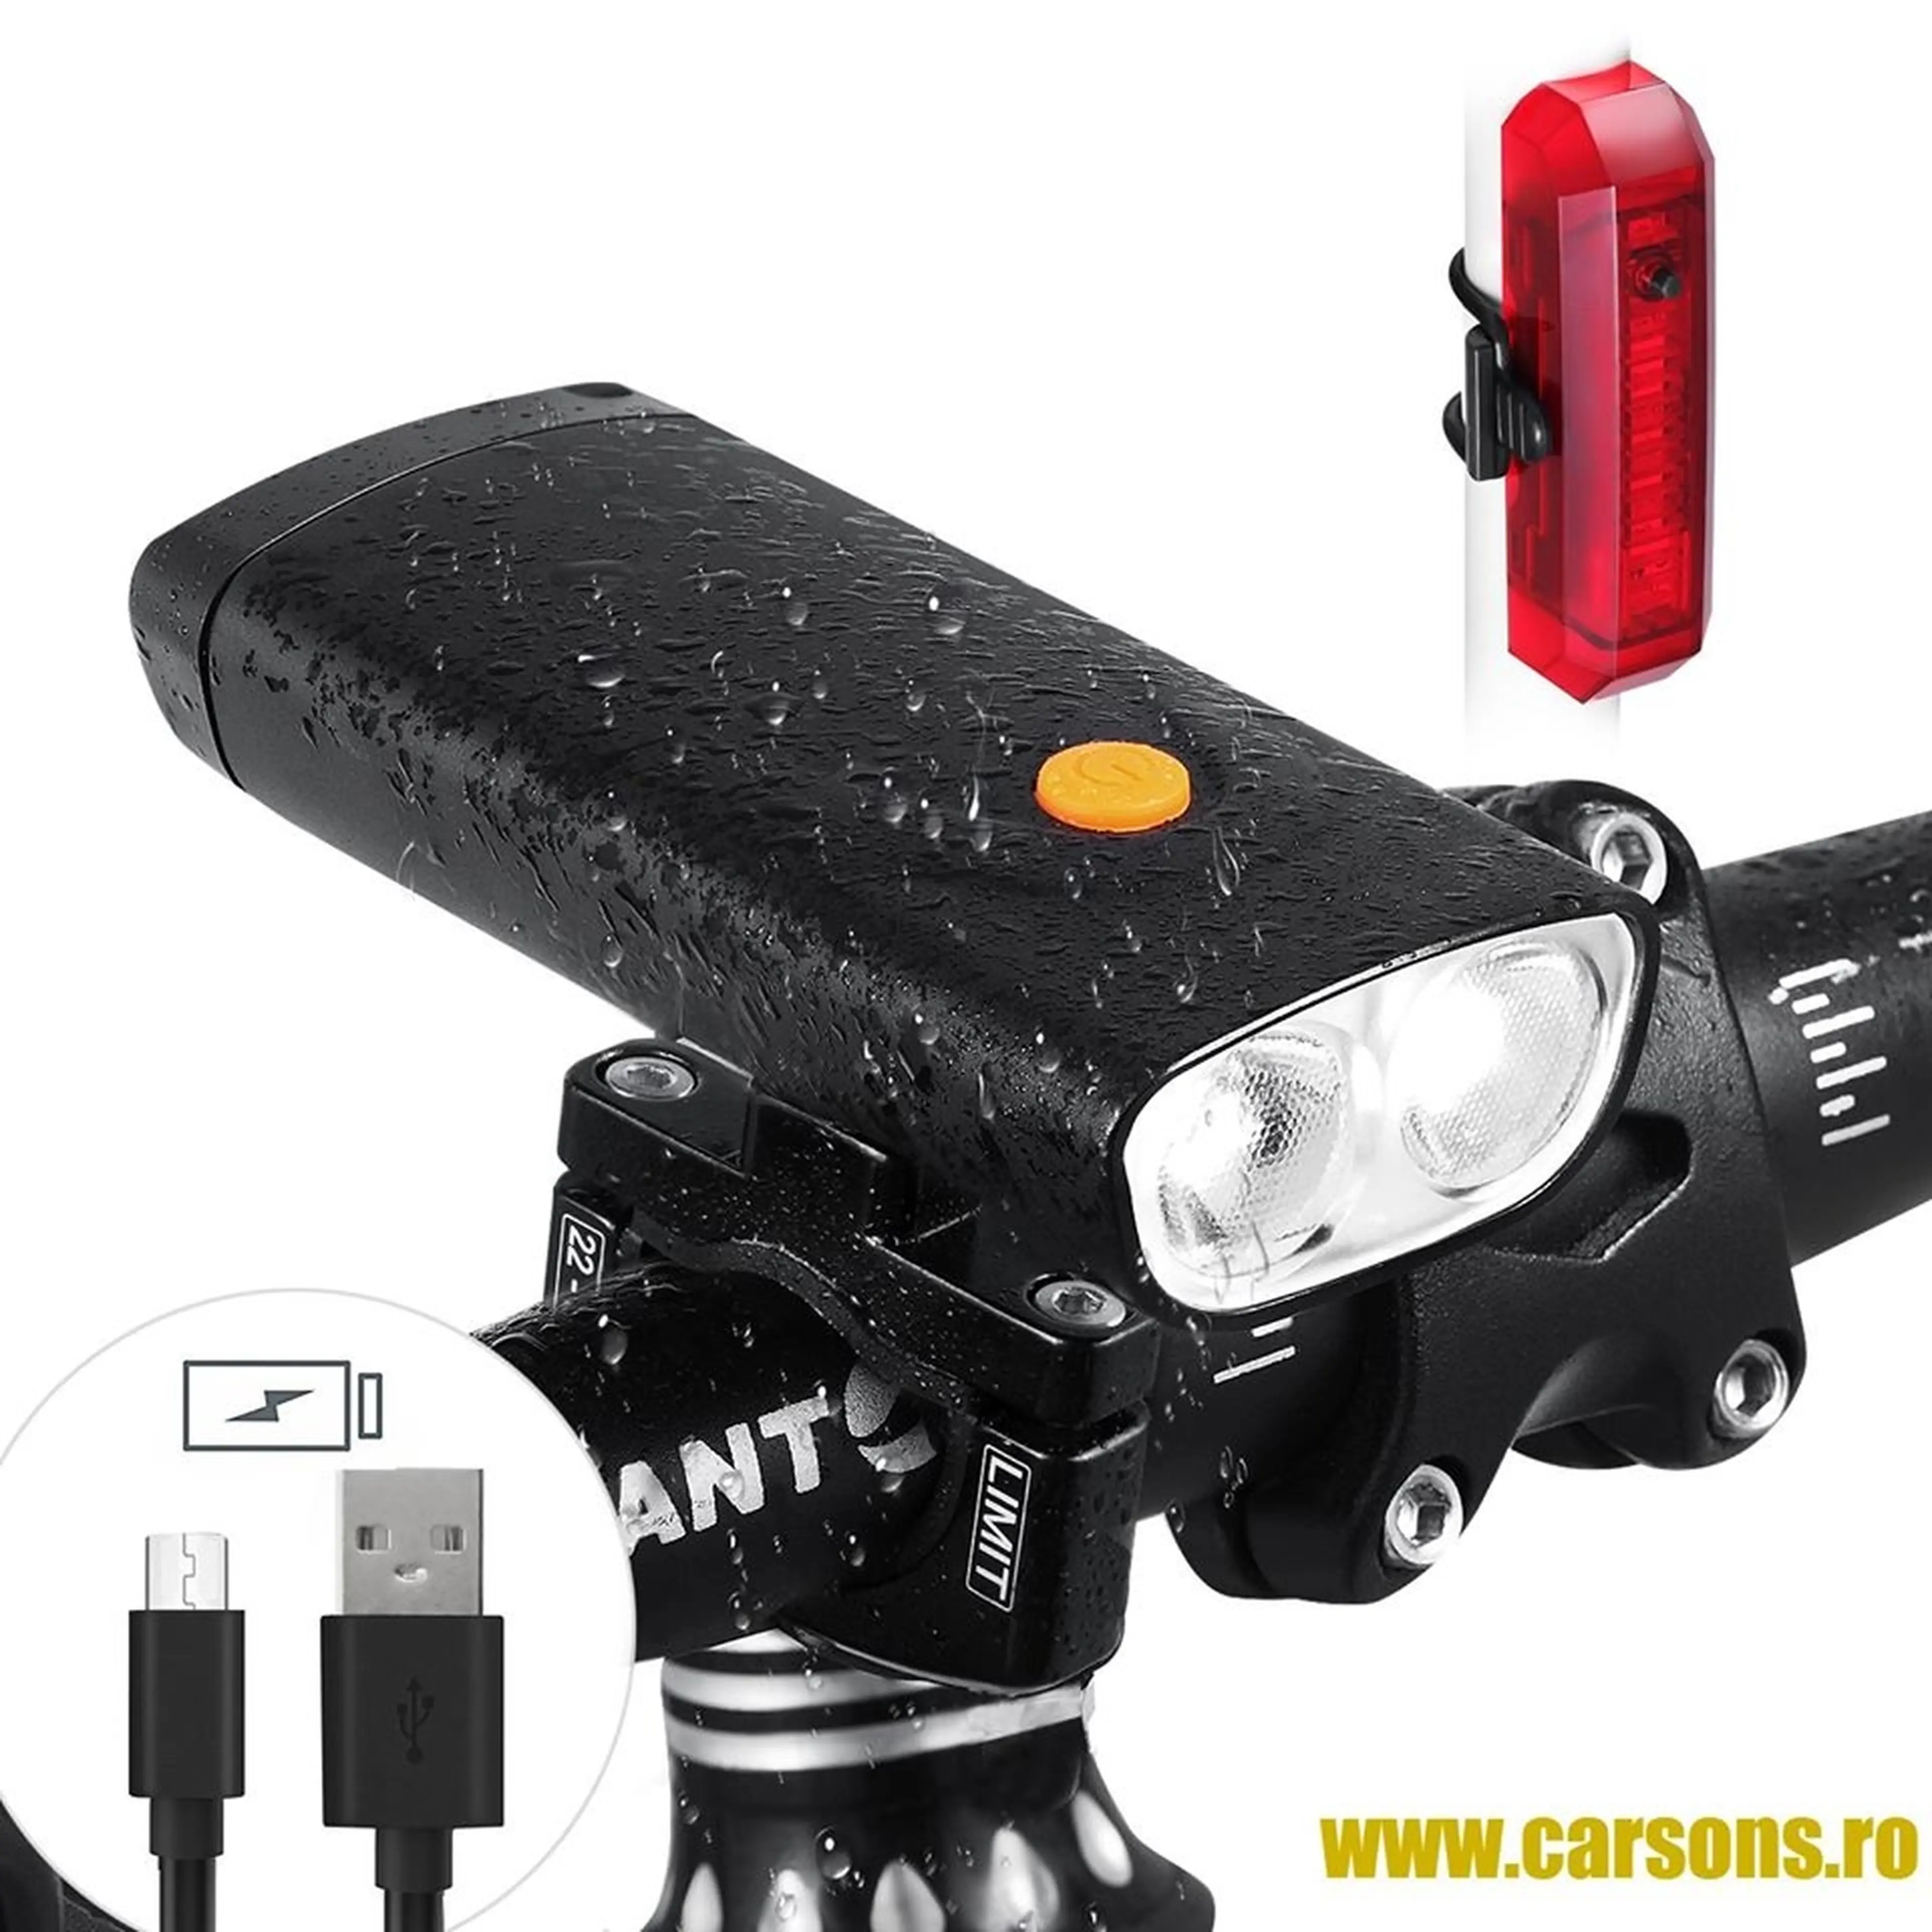 Image Www.carsons.ro - lumini bicicleta si alte accesorii cu LED